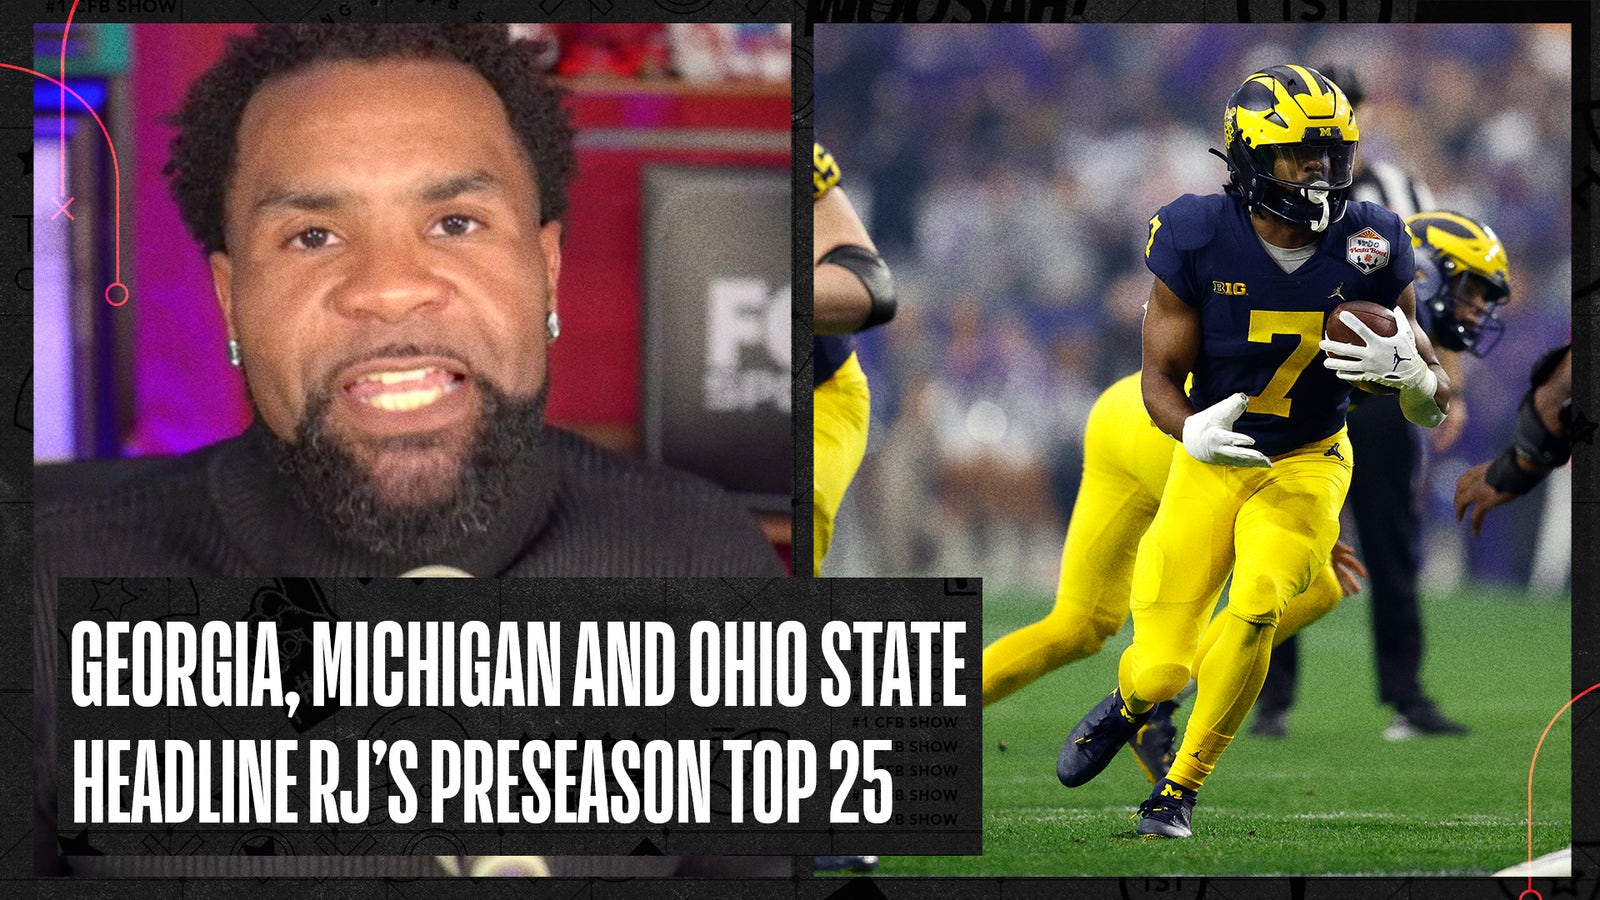 RJ's Preseason Top 25 revealed: Georgia, Michigan, Ohio State on top